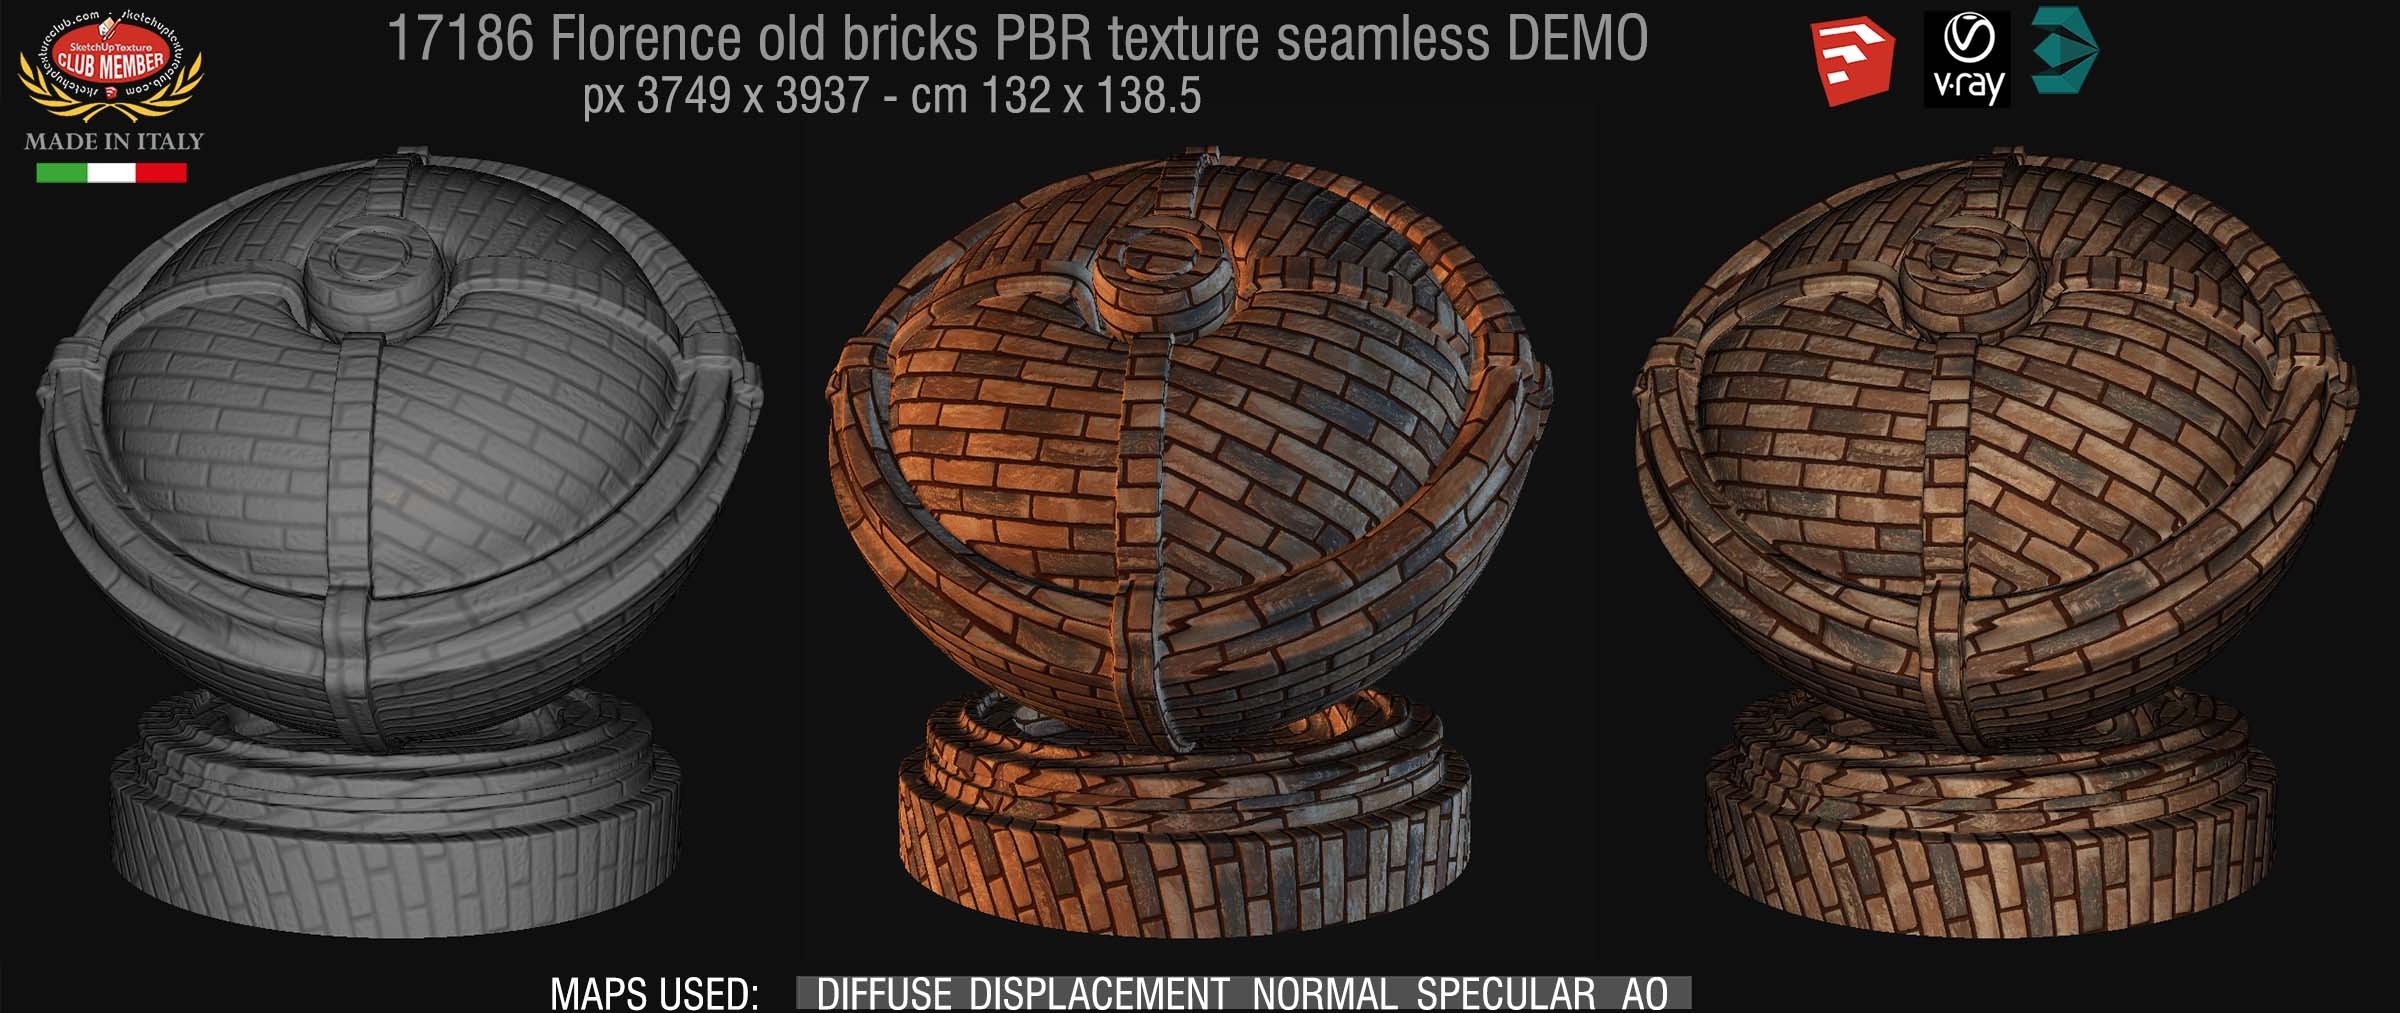 17186 Florence old bricks PBR texture seamless DEMO